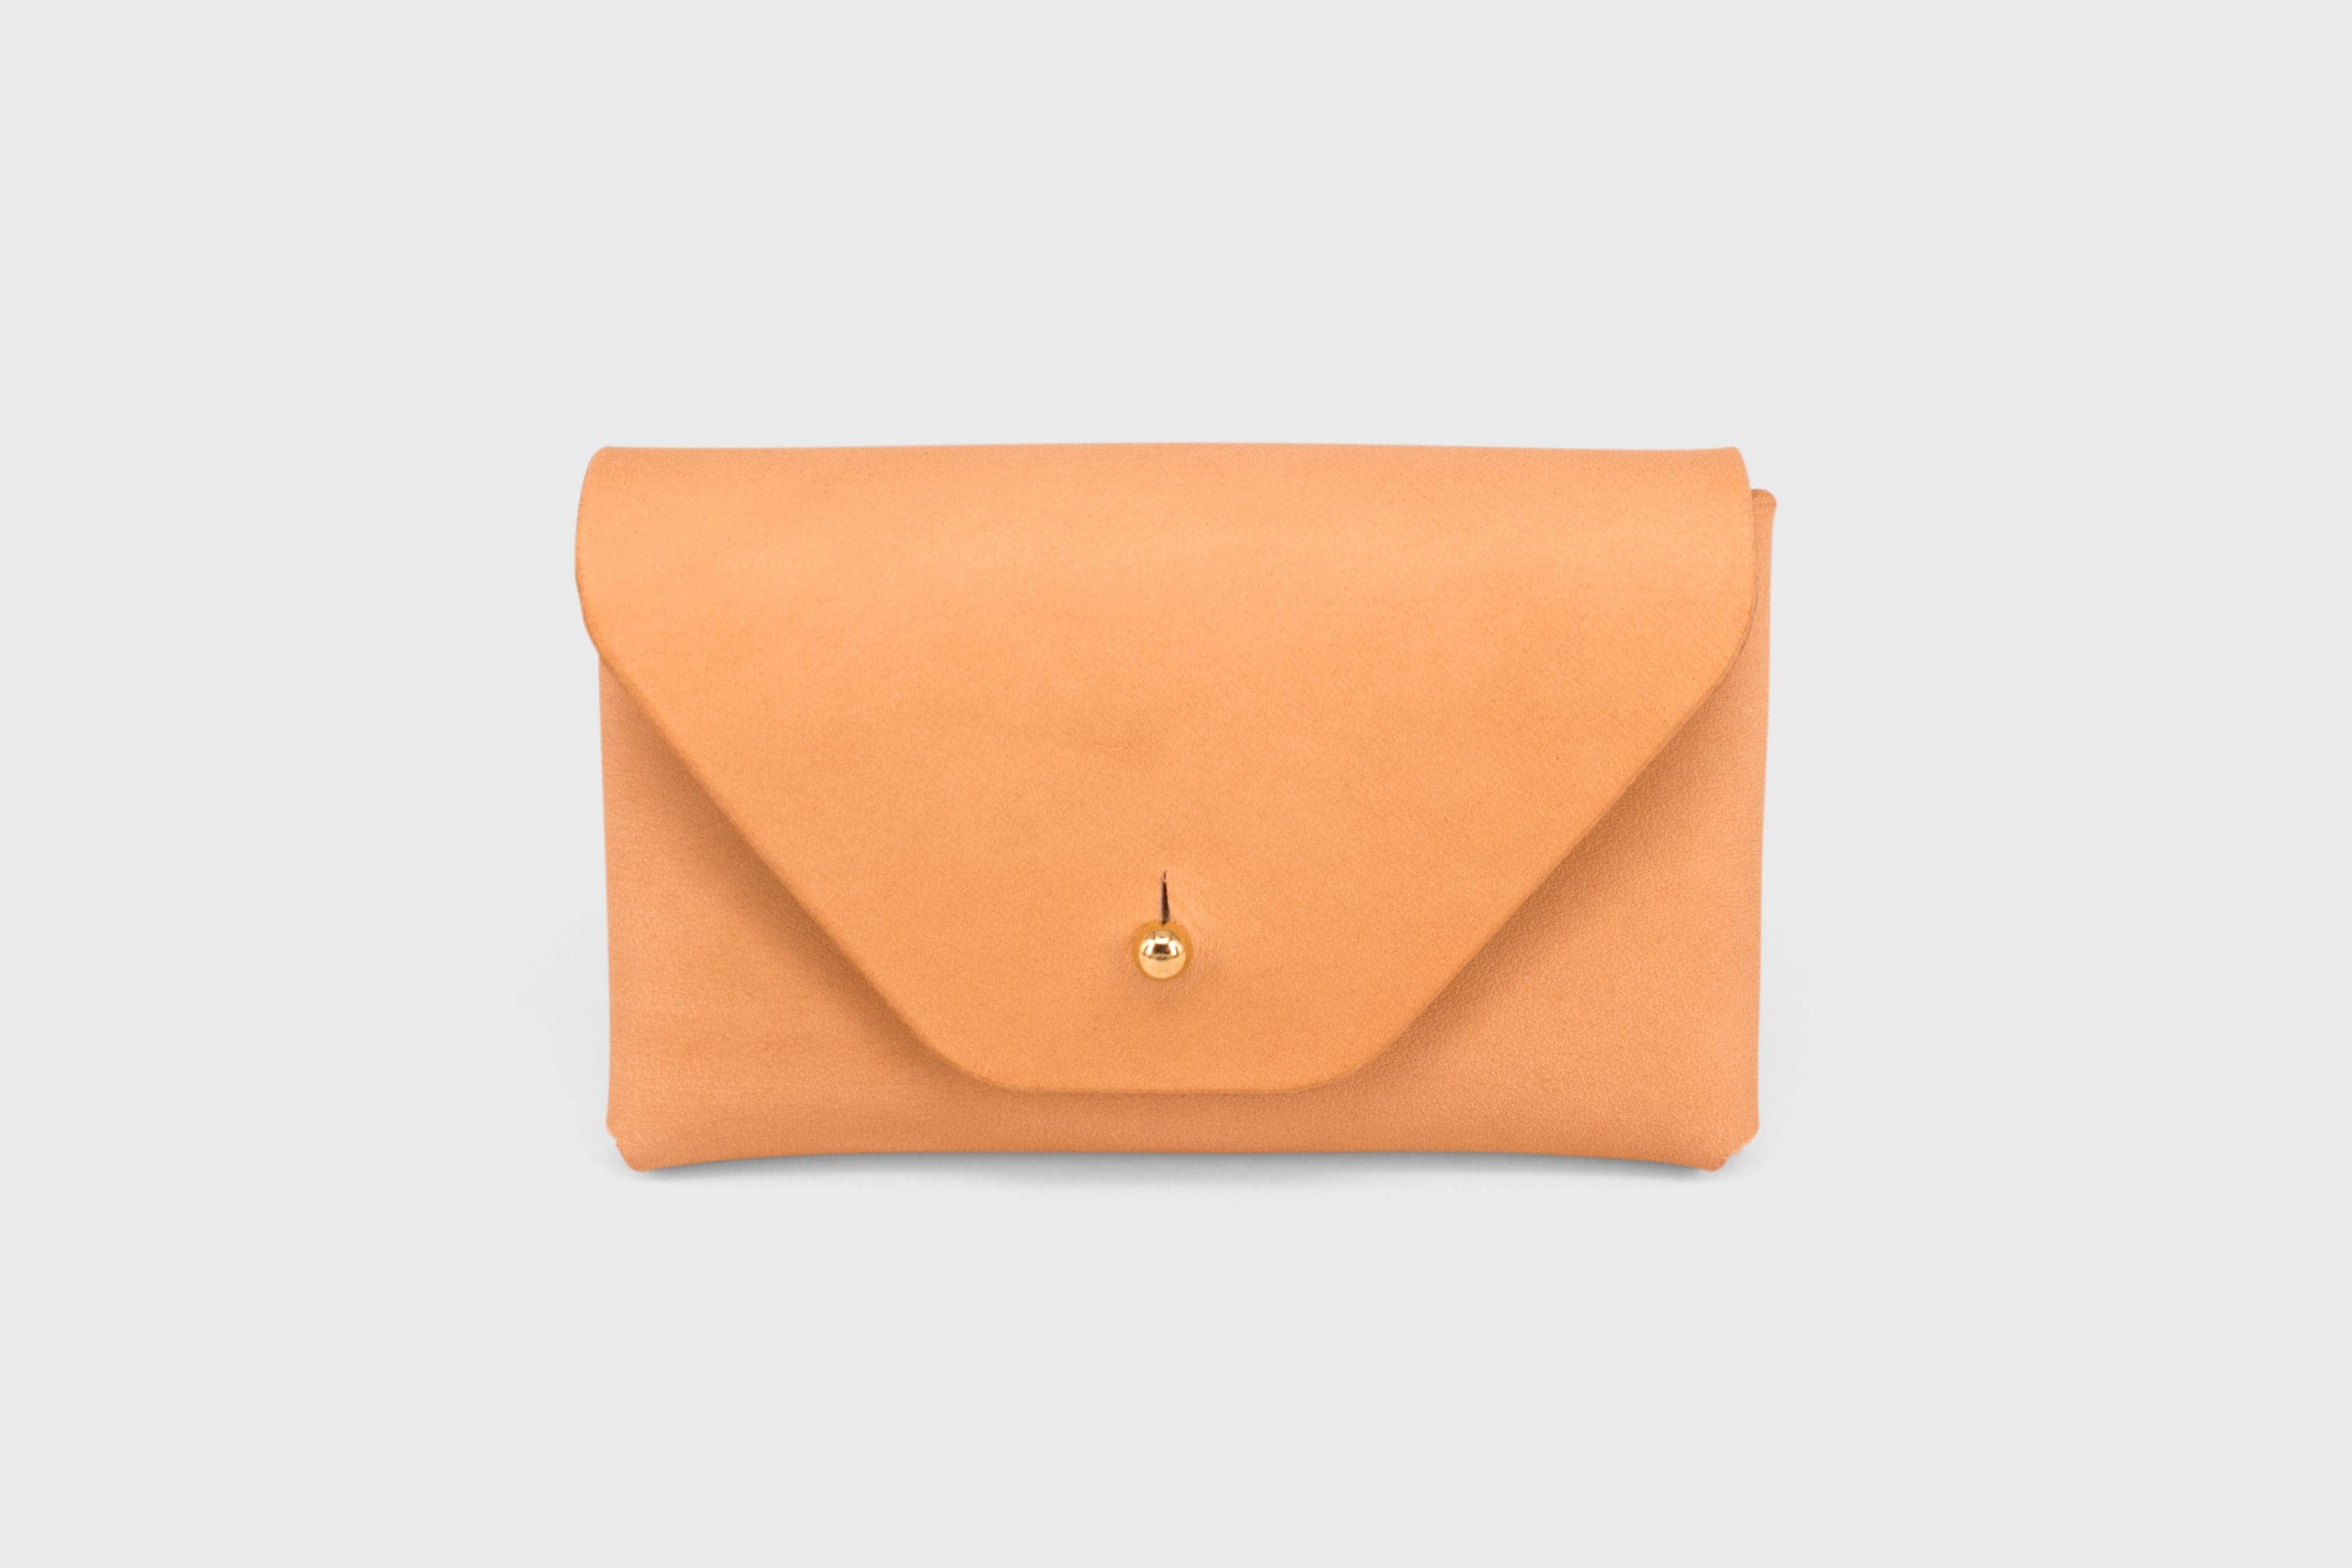 Miniwallet Brown Small Design Vachetta Leather By Manuel Dreesmann Atelier Madre Barcelona